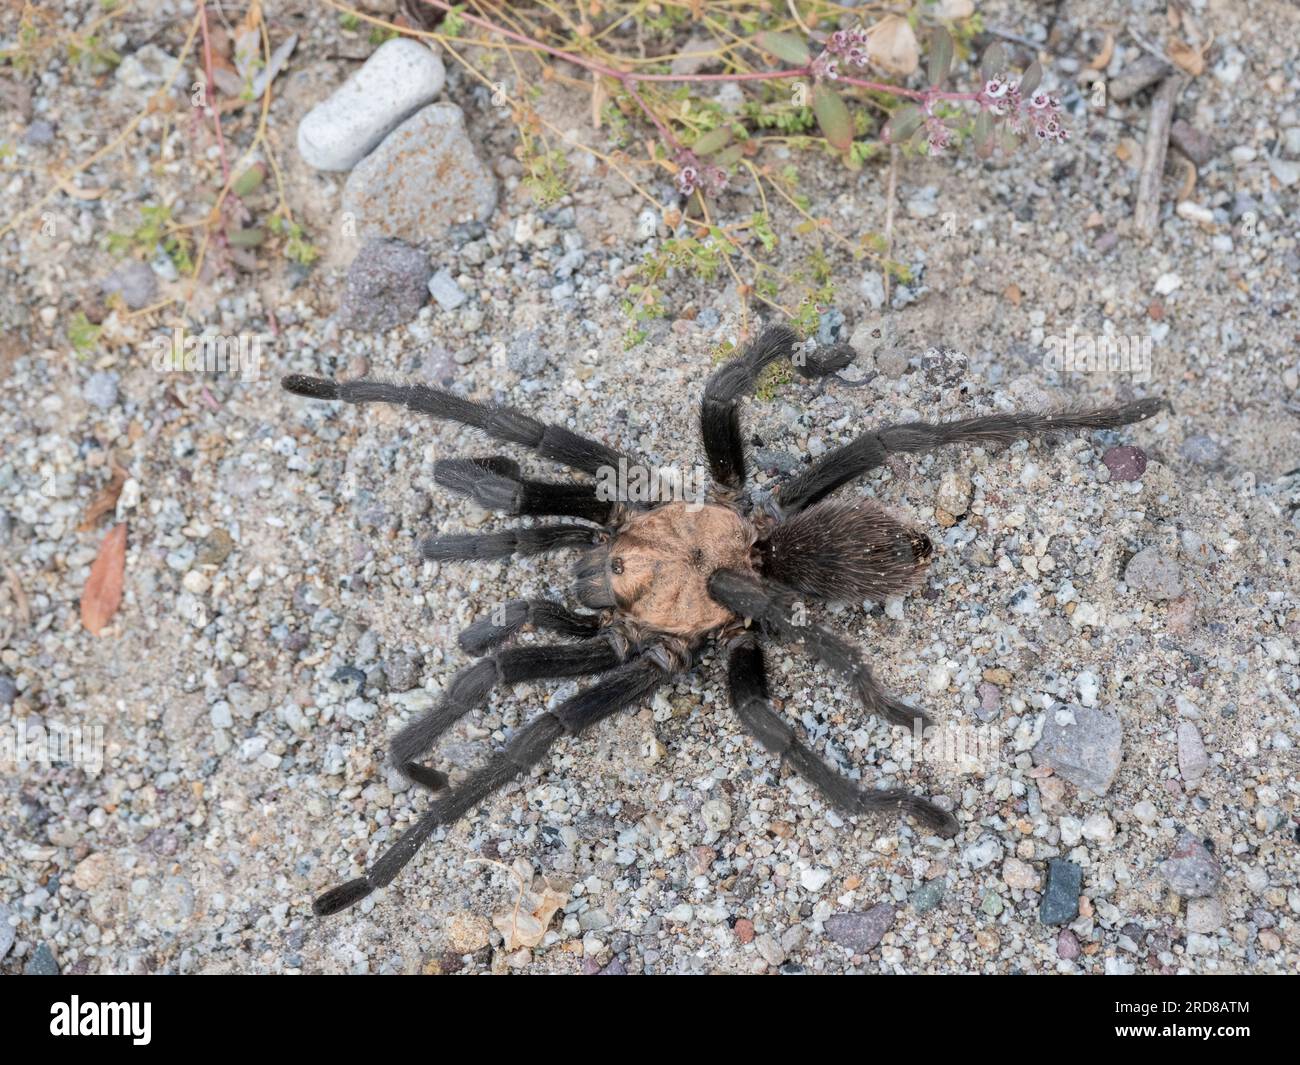 Adult tarantula (Aphonopelma spp)., found near San Jose del Cabo, Baja California Sur, Mexico, North America Stock Photo